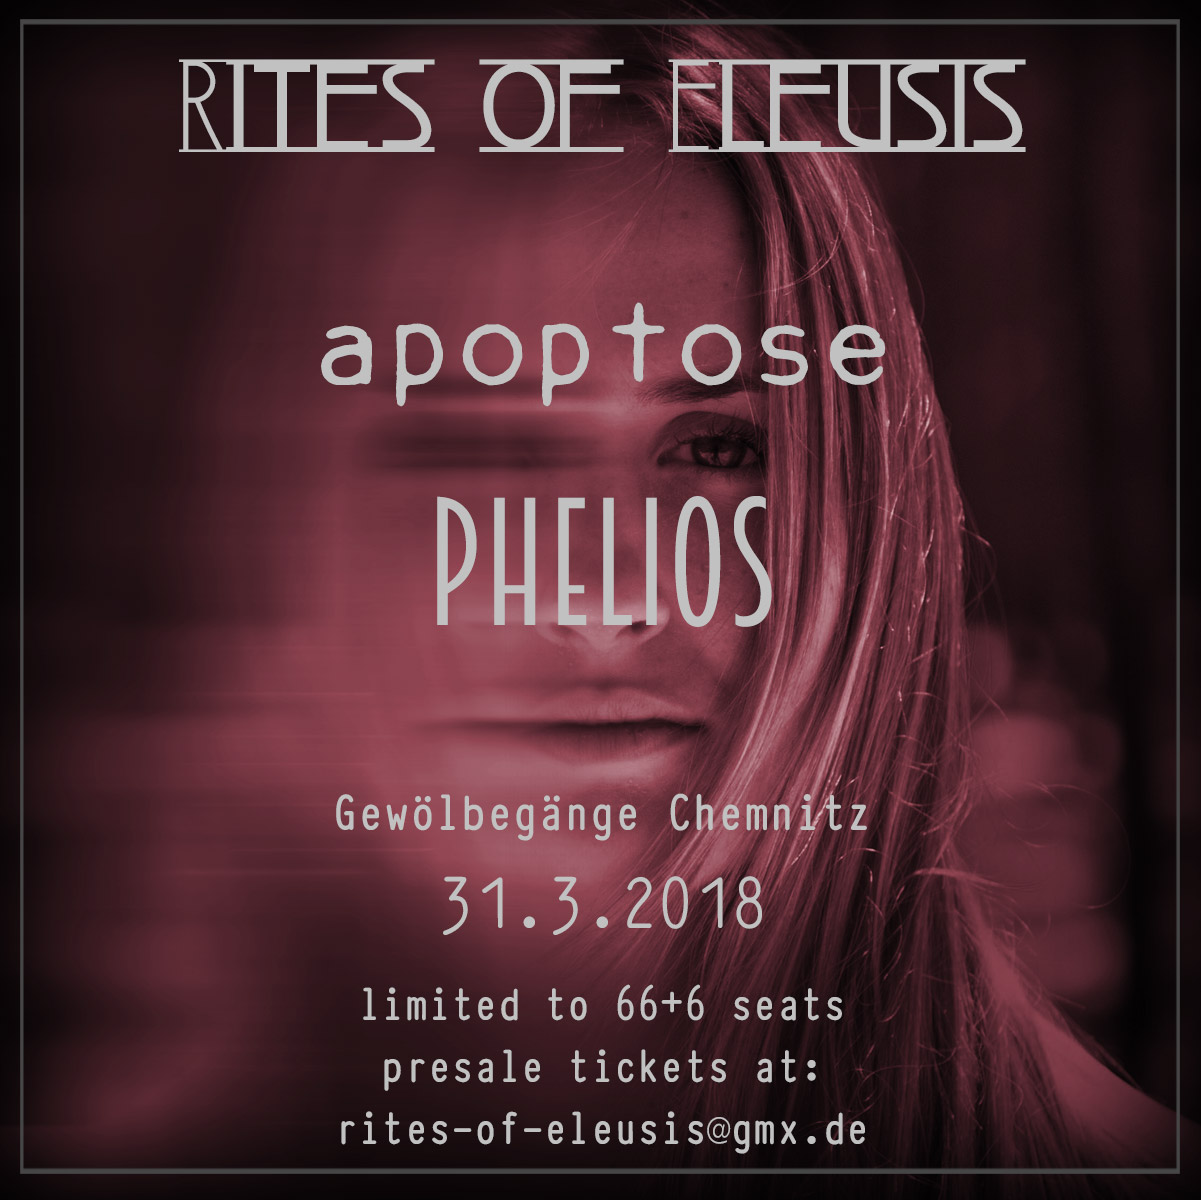 rites of eleusis poster